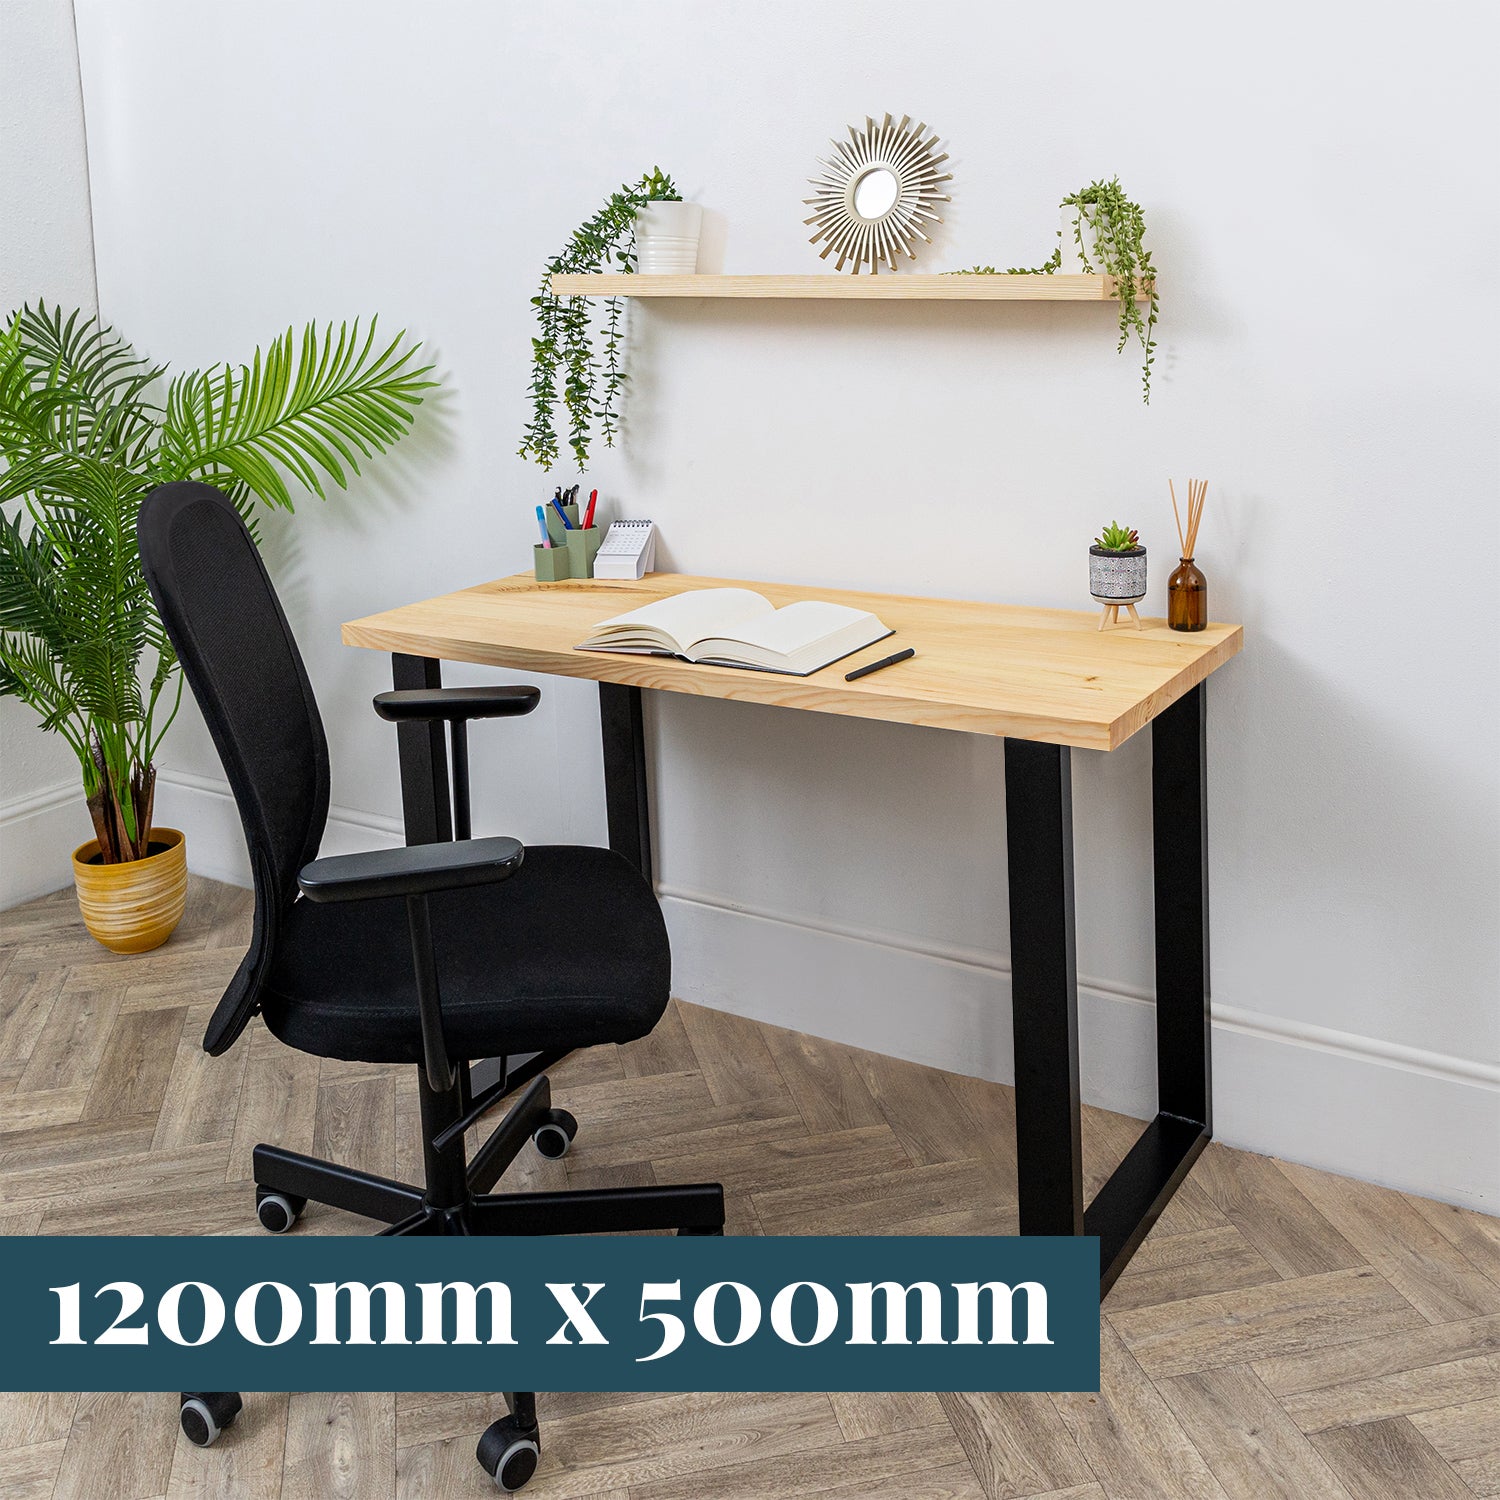 Reclaimed Wooden Desks with Industrial Metal Legs #length_1200mm depth_500mm